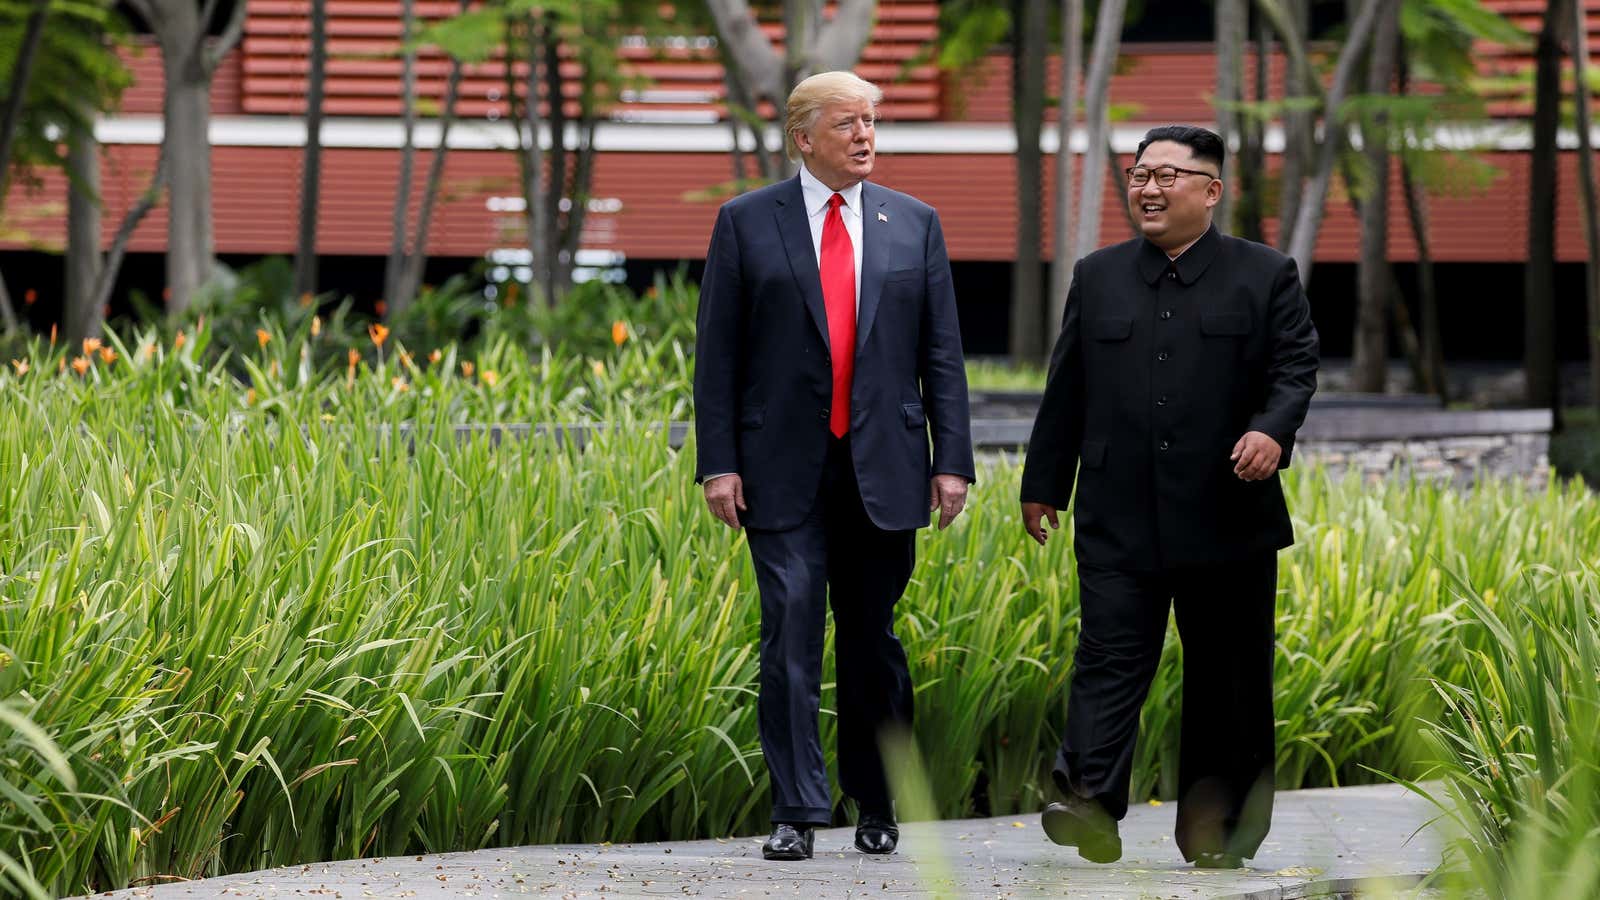 Kim Jong-un is believed to be around half Trump’s age.